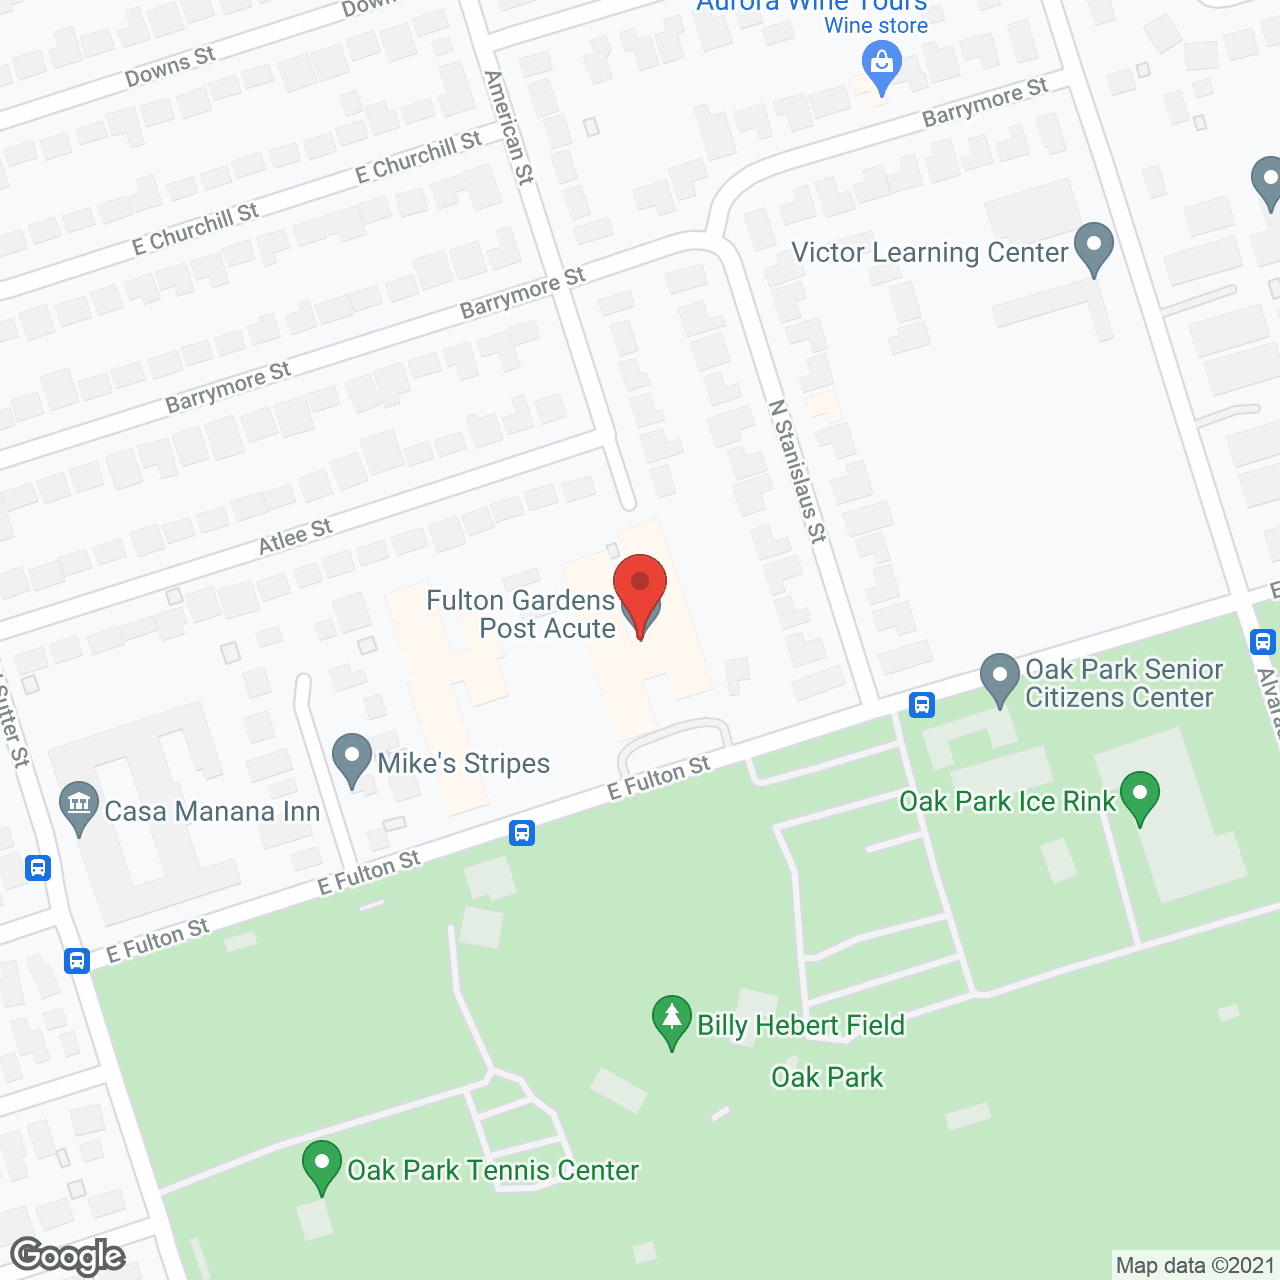 Fulton Gardens Post Acute in google map